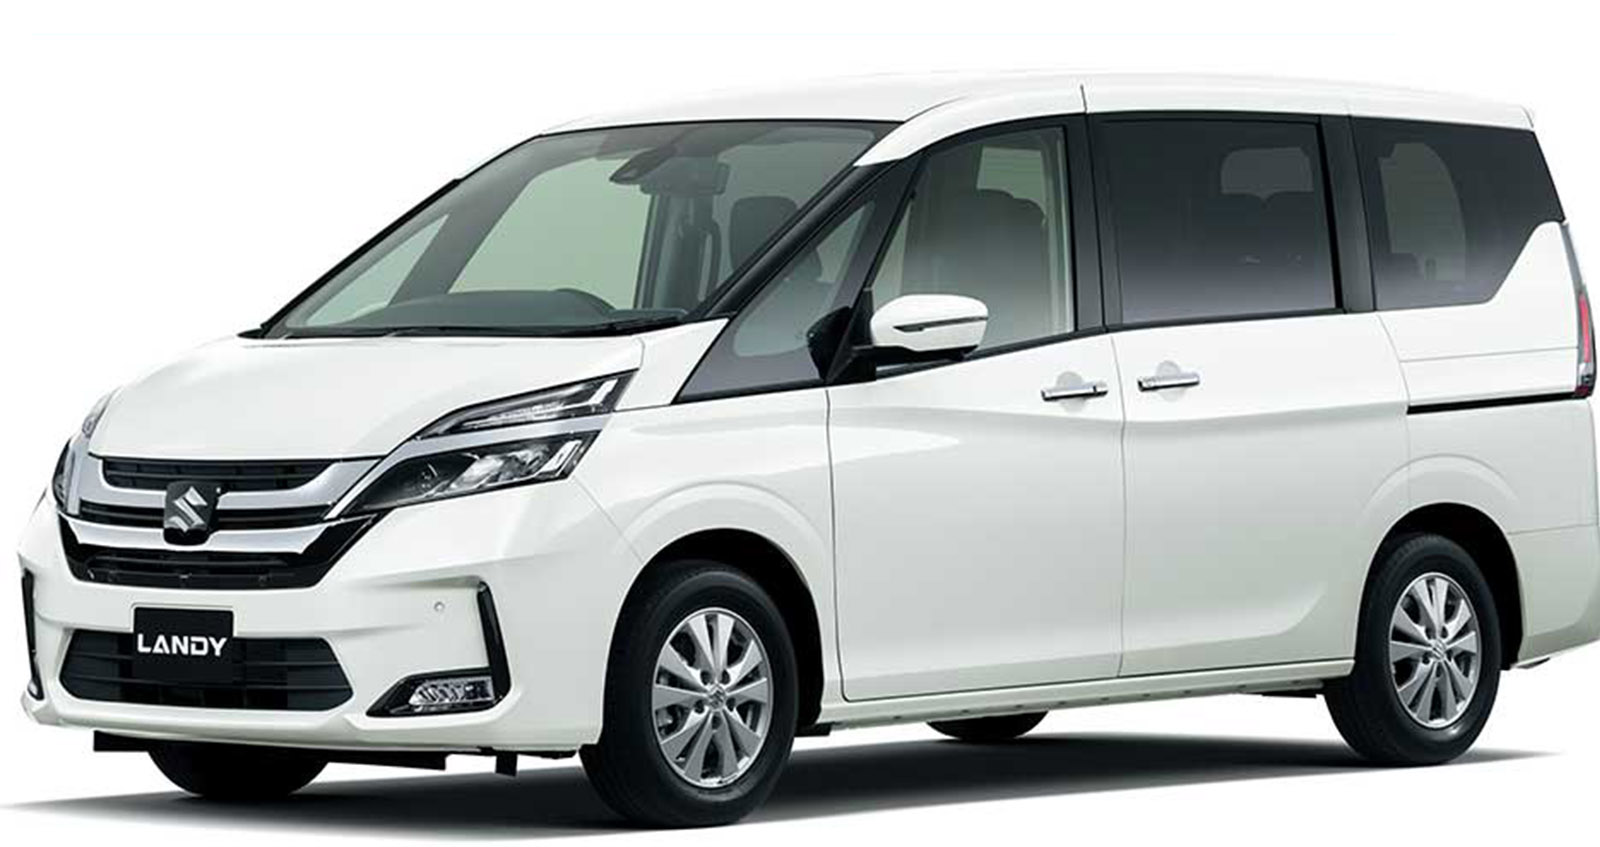 Suzuki Landy MPV 8 ที่นั่ง ราคา 750,000 บาท ในญี่ปุ่น